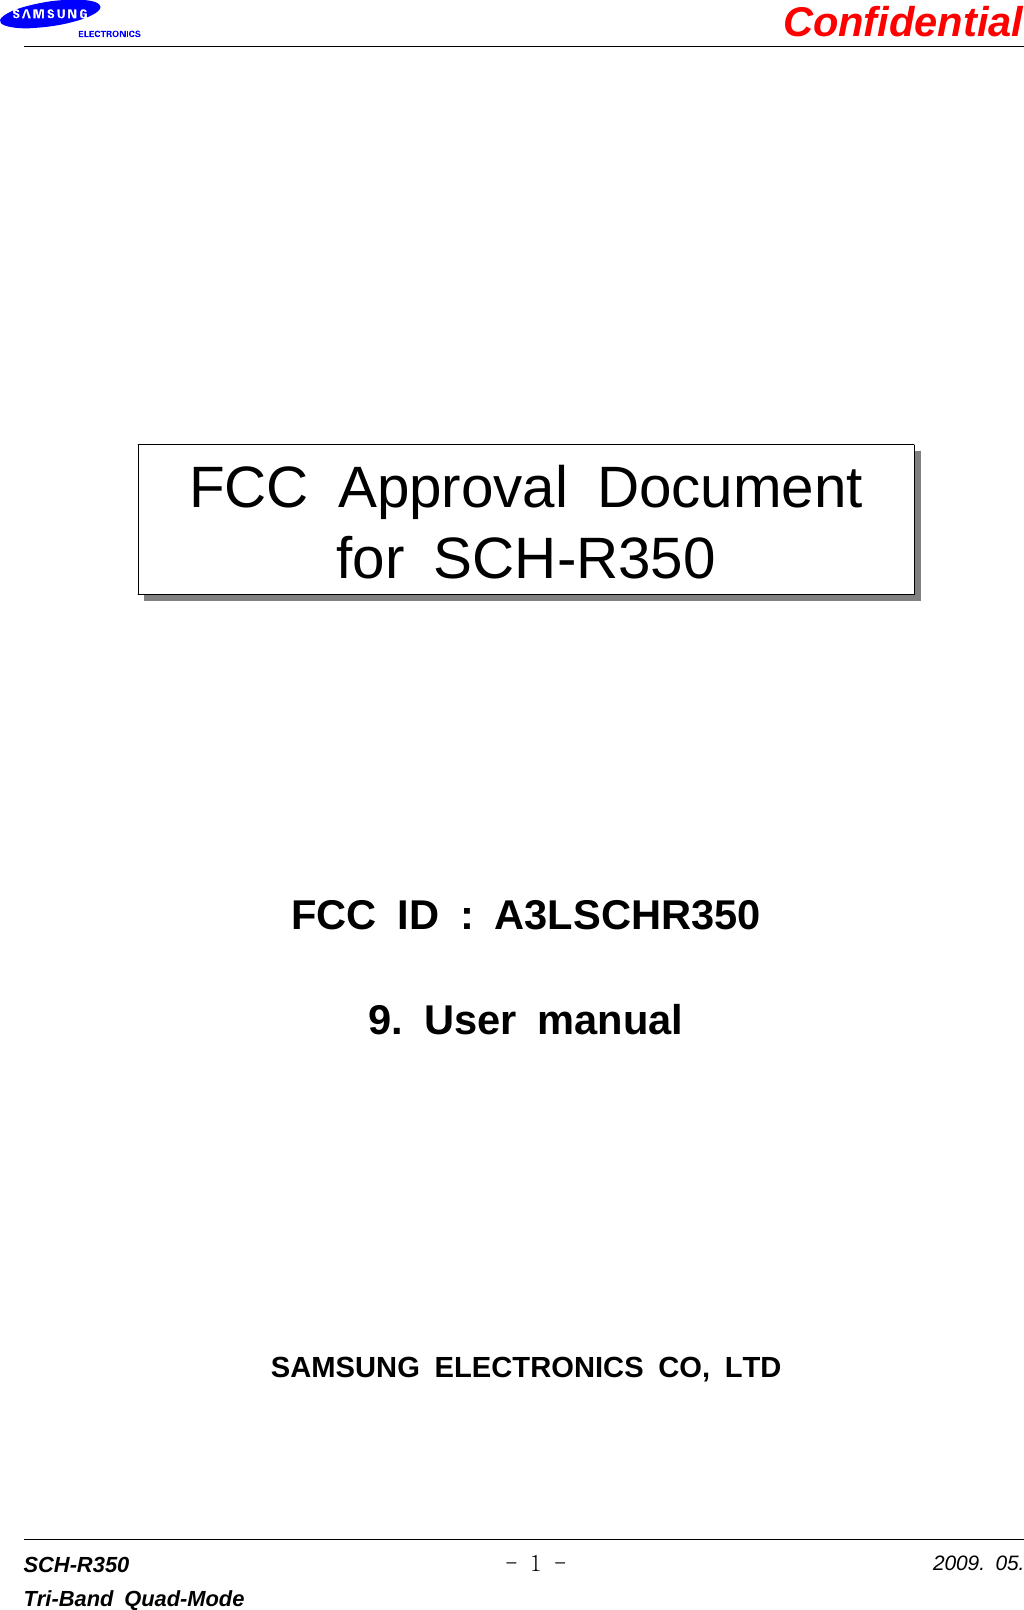 ConfidentialSCH-R350Tri-Band Quad-Mode2009. 05.-1-FCC Approval Documentfor SCH-R350FCCID:A3LSCHR3509. User manualSAMSUNG ELECTRONICS CO, LTD